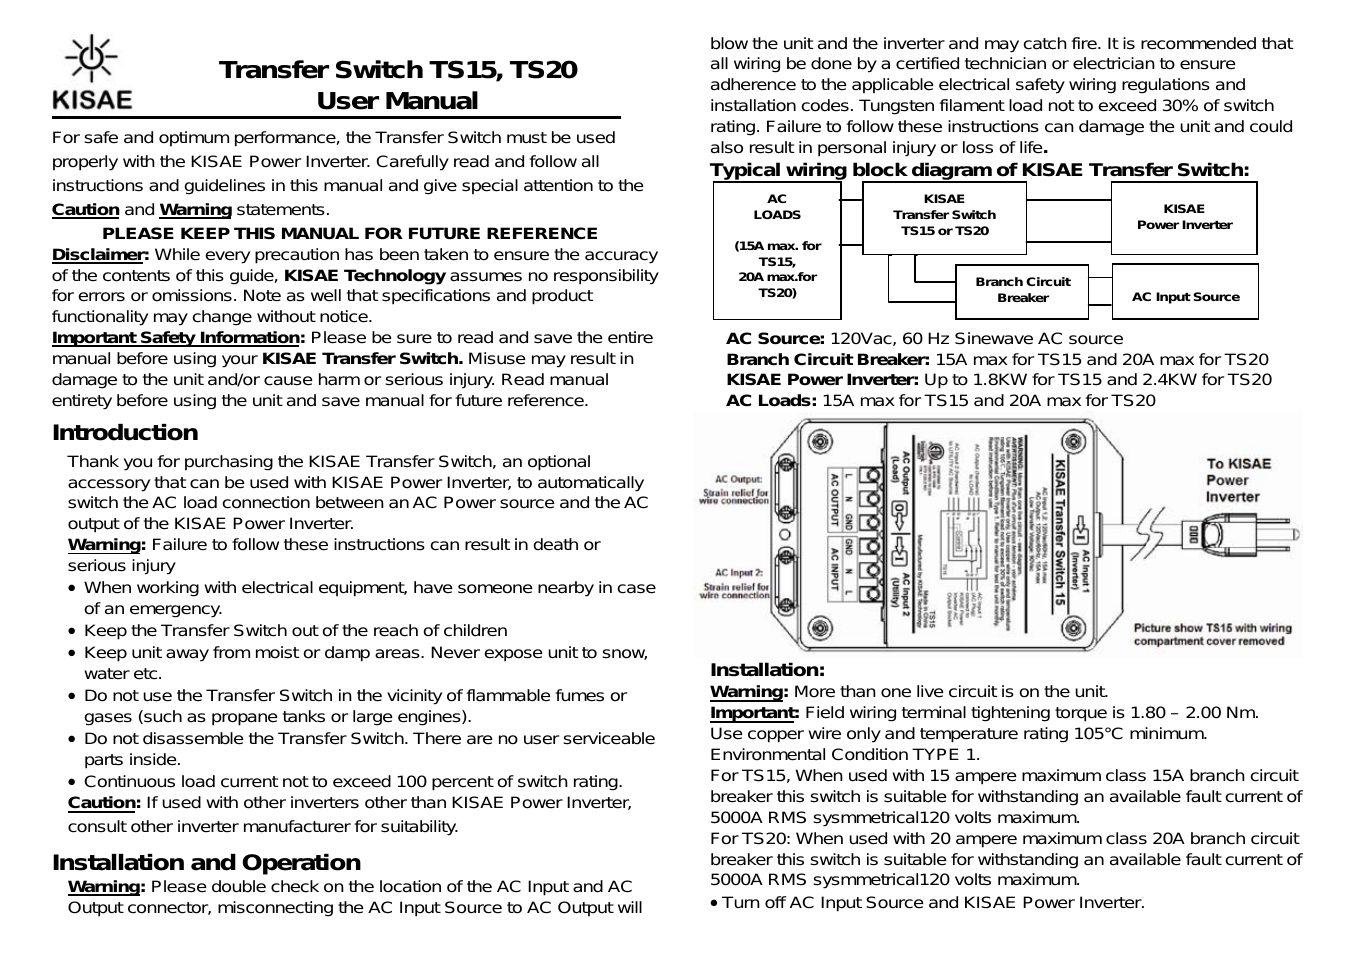 TS20 Transfer Switch